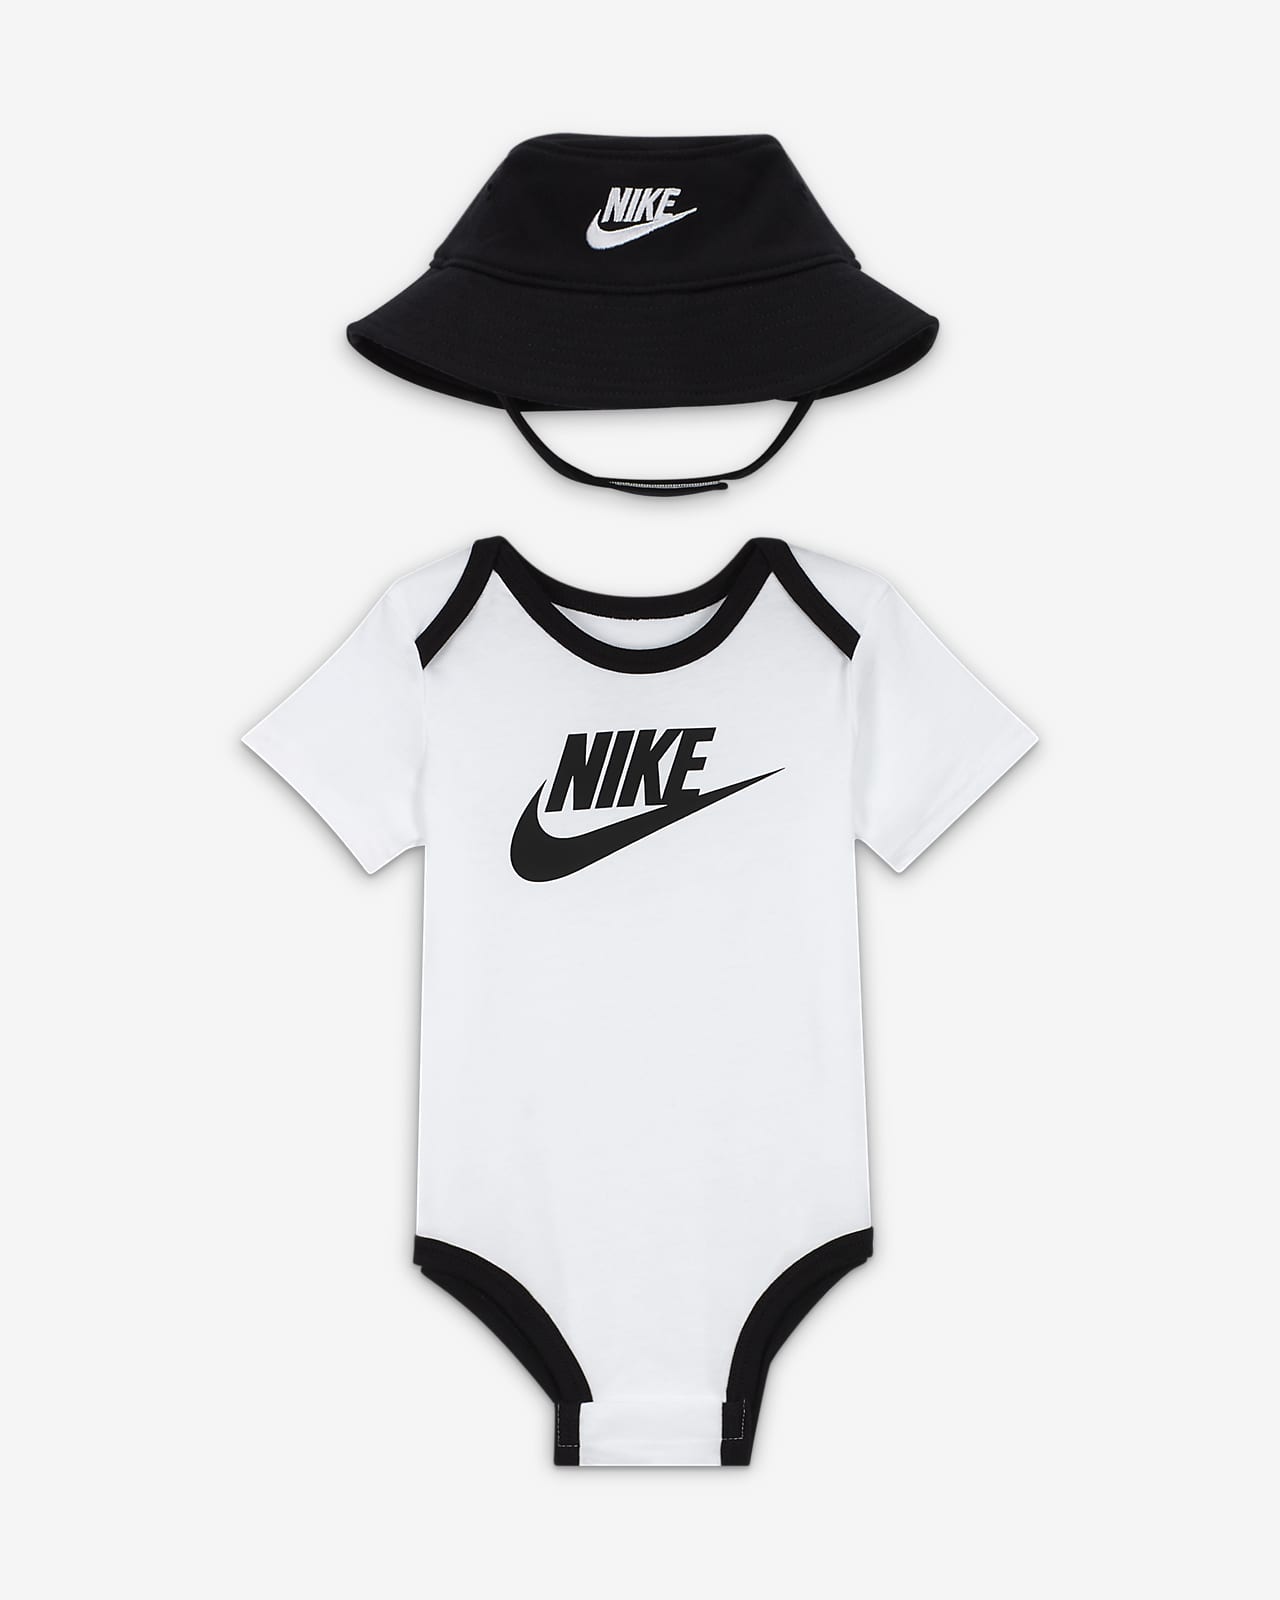 Nike Baby Bodysuit and Hat Box Set